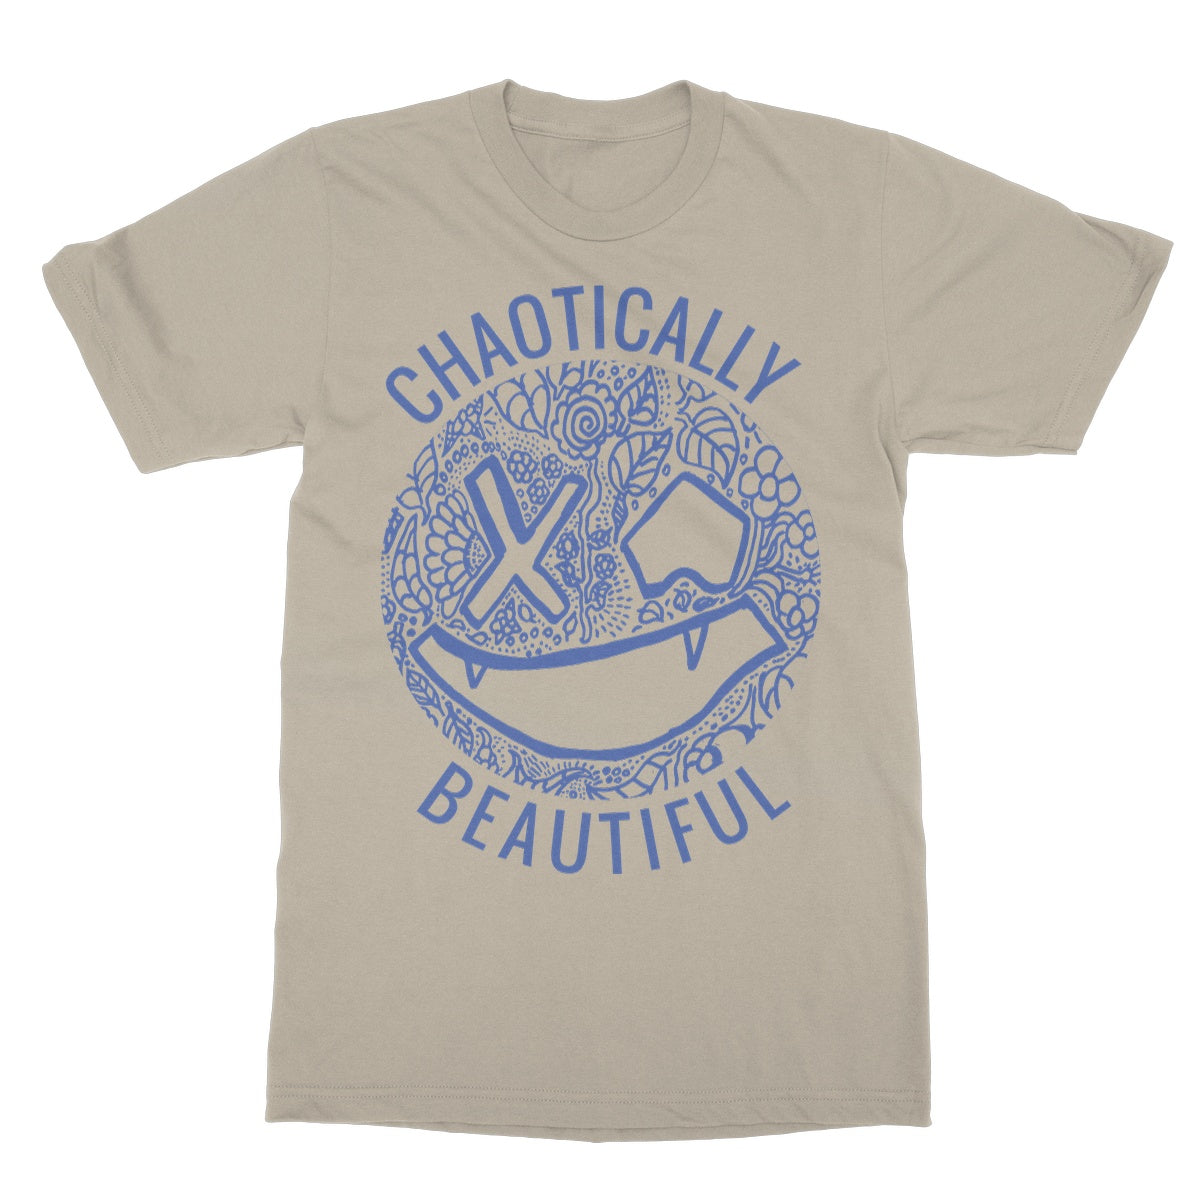 Tee shirt - Chaotically Beautiful